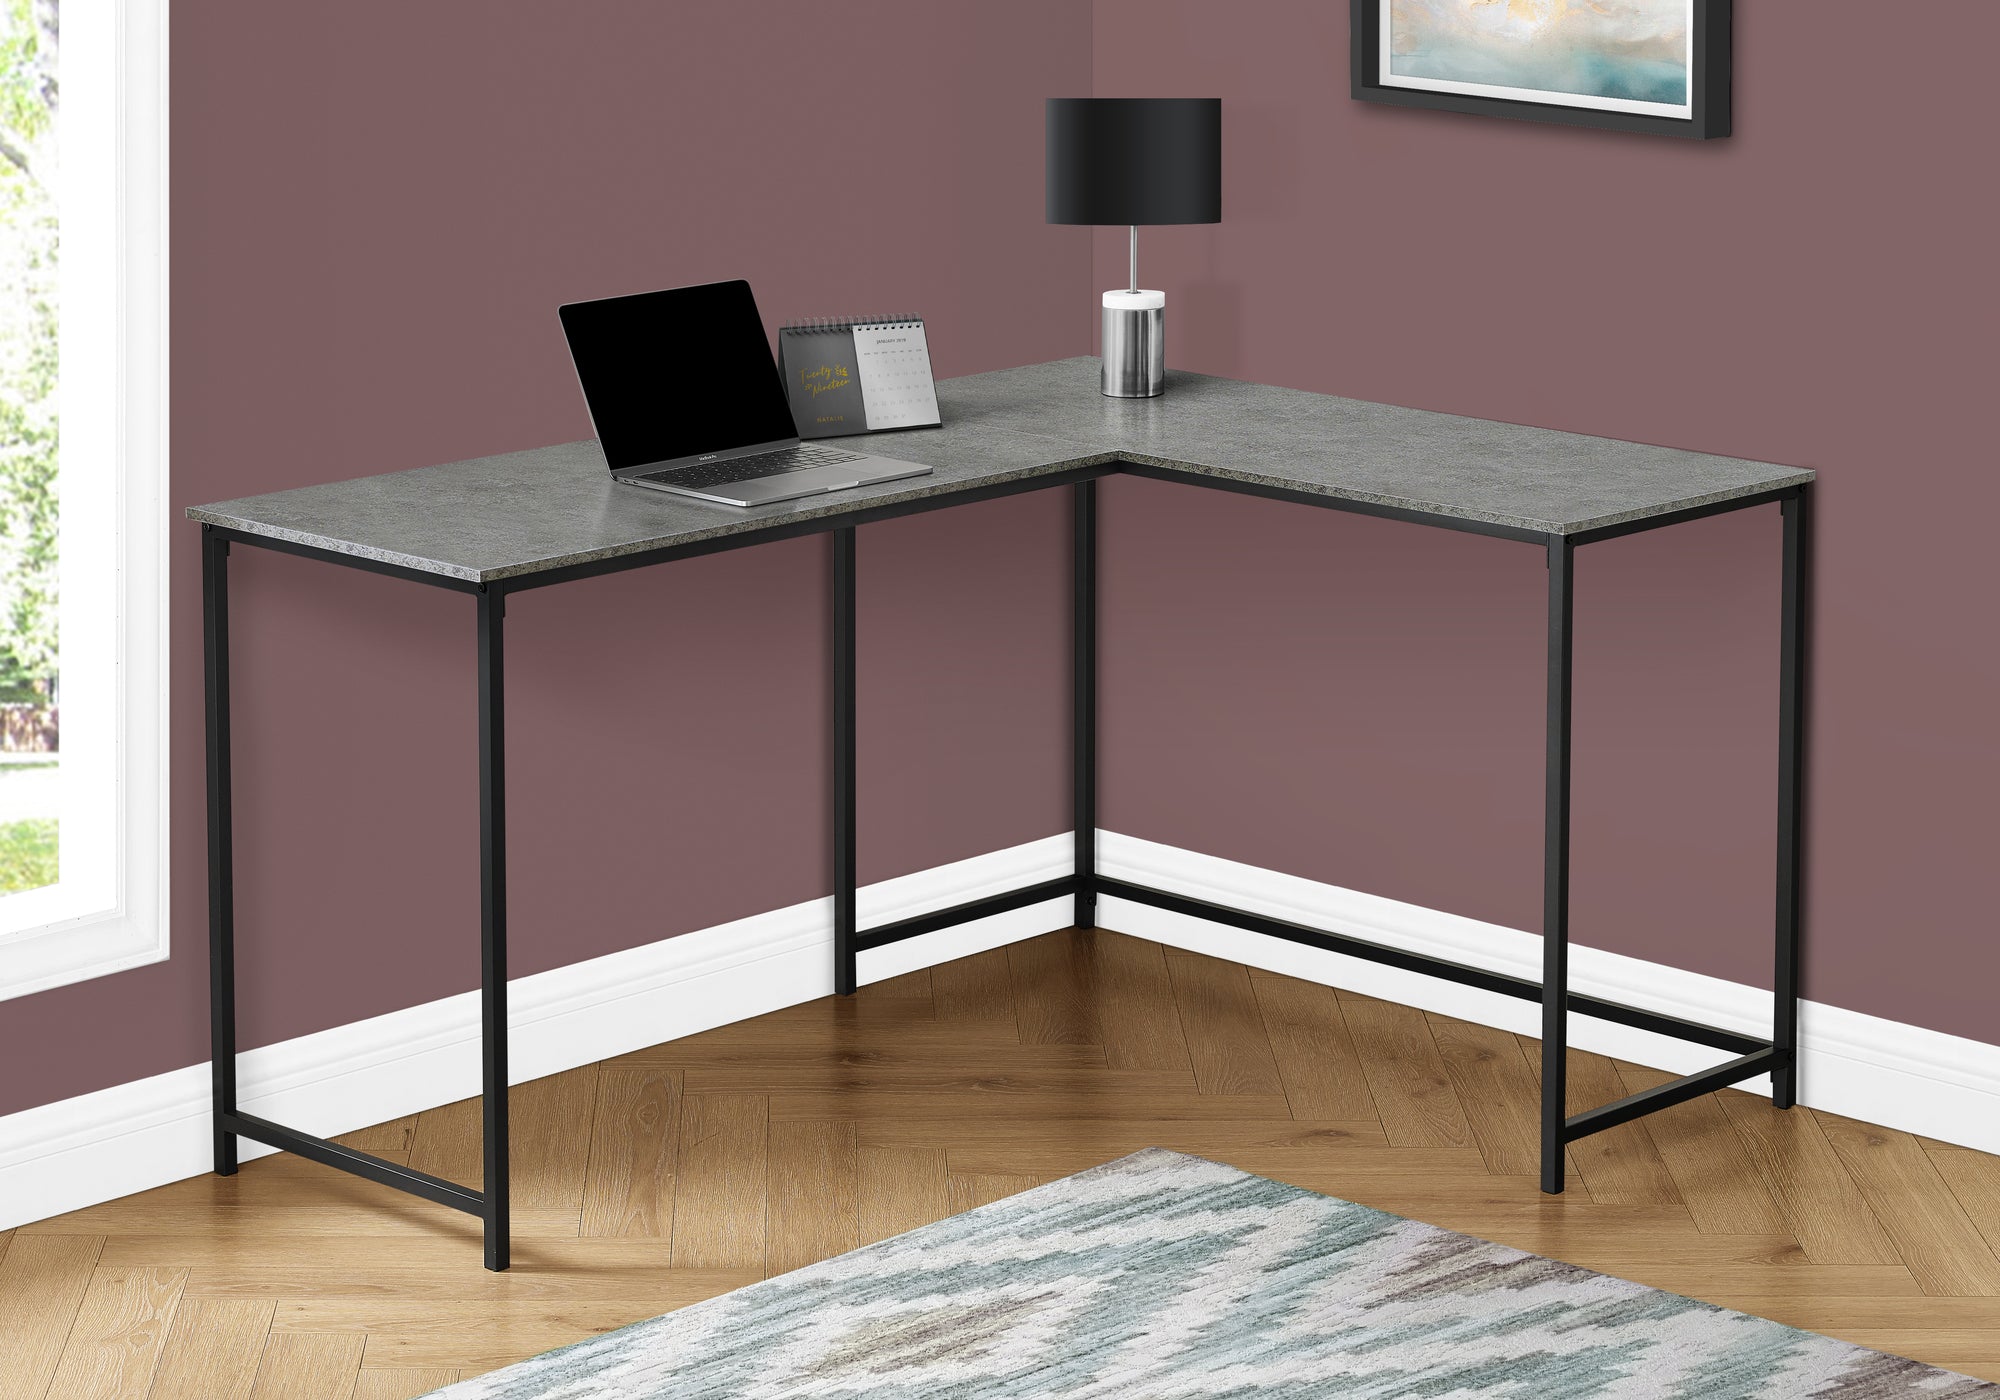 MN-987392    Computer Desk, Home Office, Corner, 58"L, L Shape, Work, Laptop, Grey Laminate, Black Metal, Contemporary, Modern